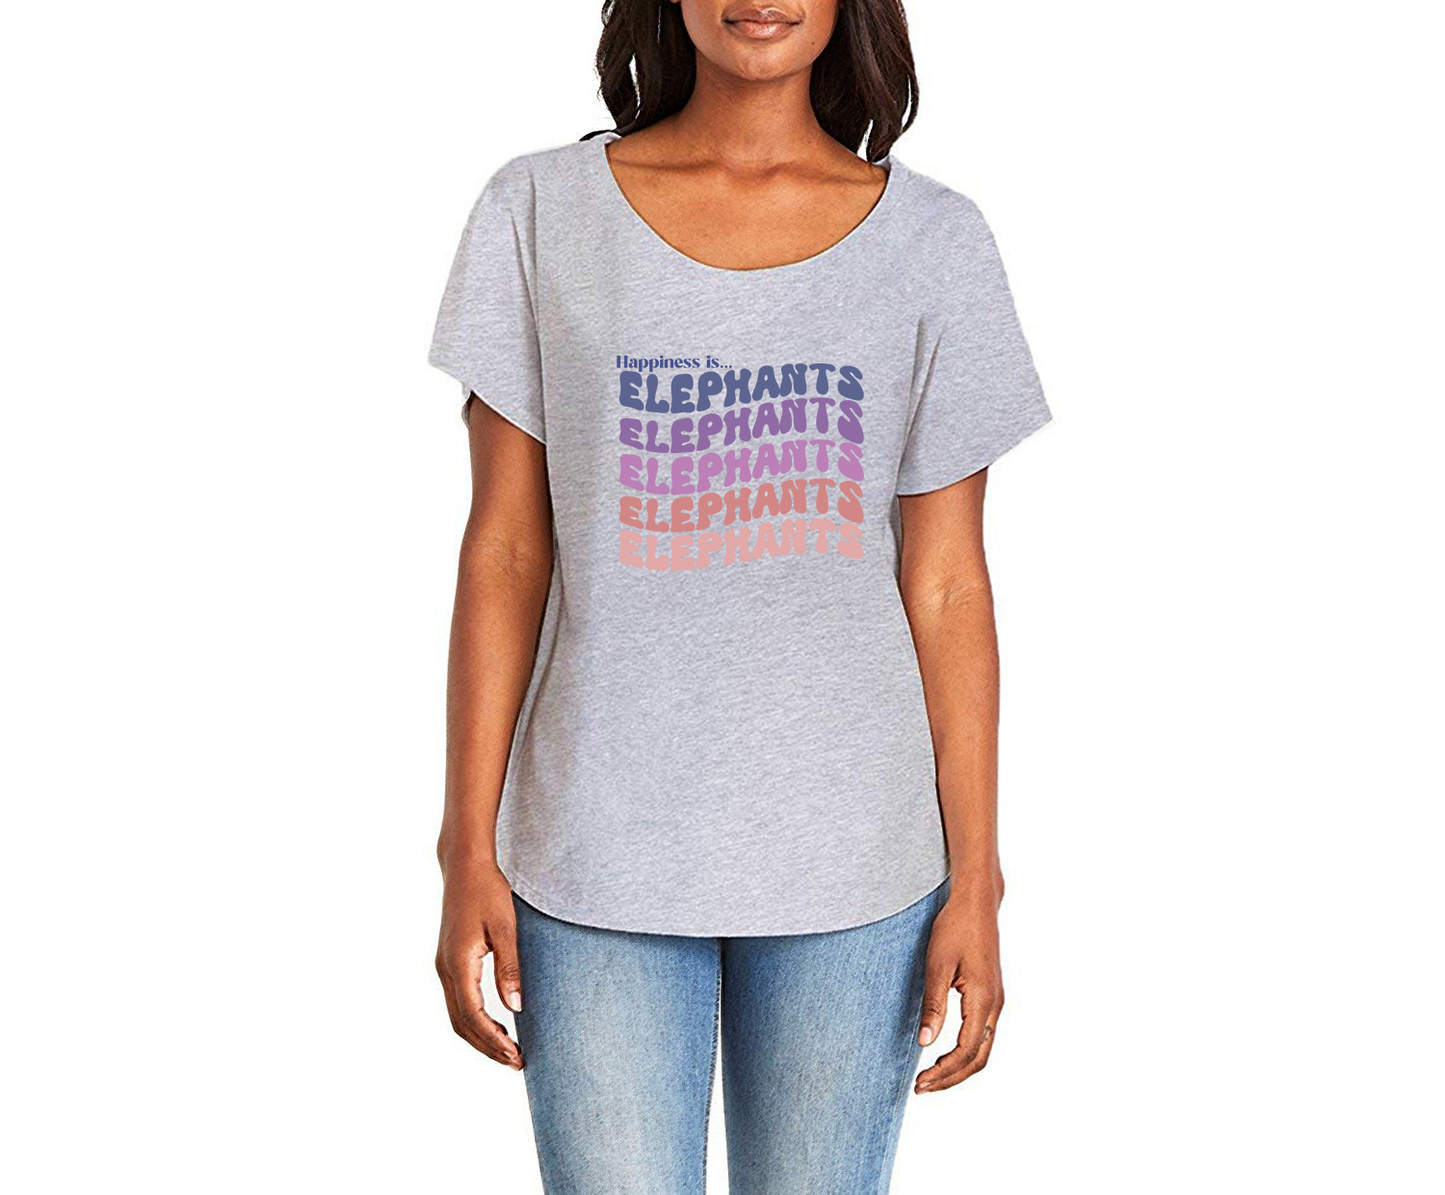 Happiness is Elephants Ladies Tee Shirt - In White & Grey